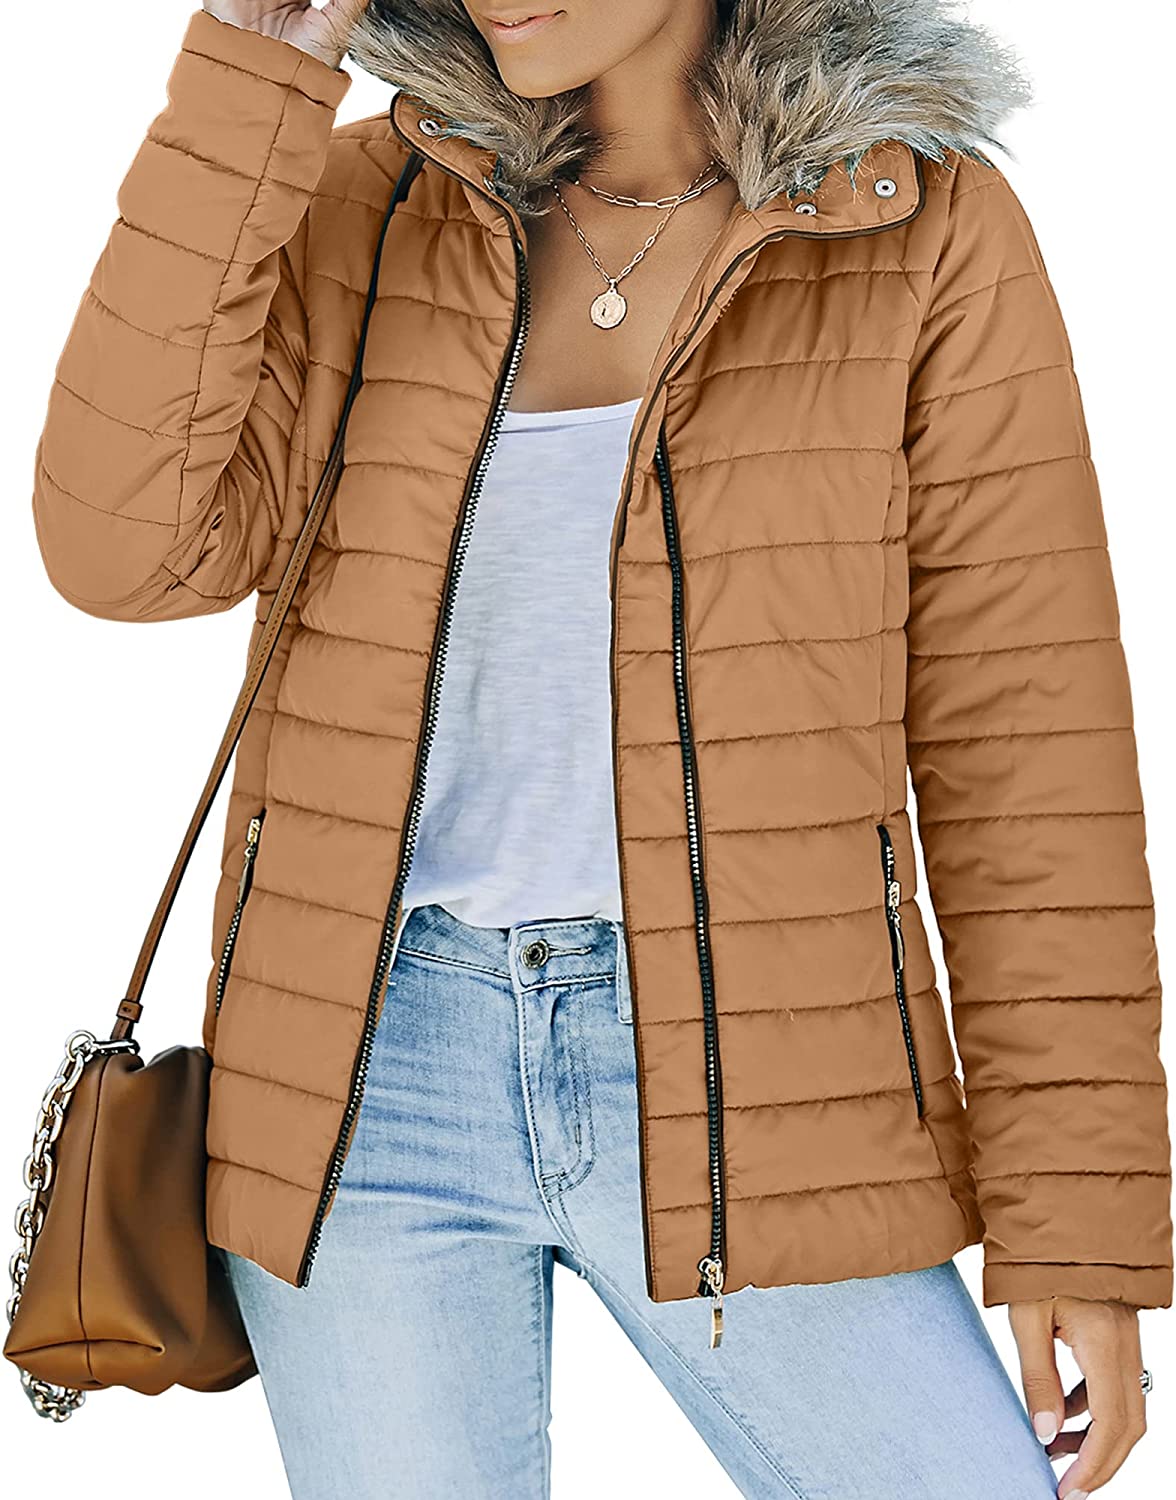 Uqnaivs Womens Winter Quilted Jacket Faux Fur Collar Zip Up Parka